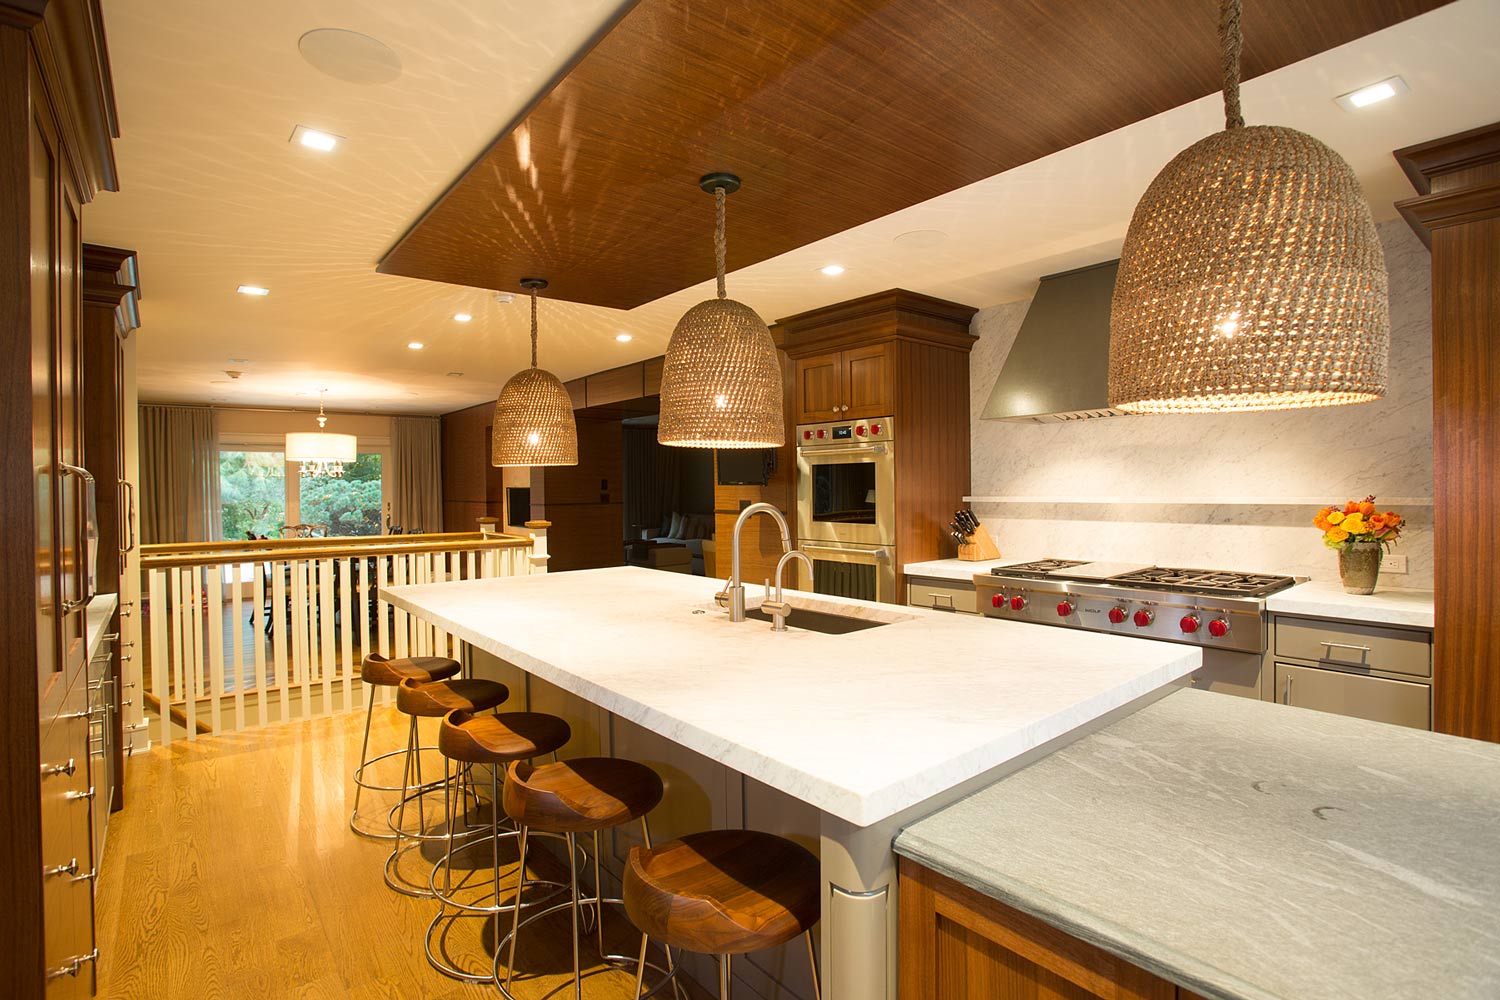 Roslyn kitchen renovation project by Annette Jaffe Interiors